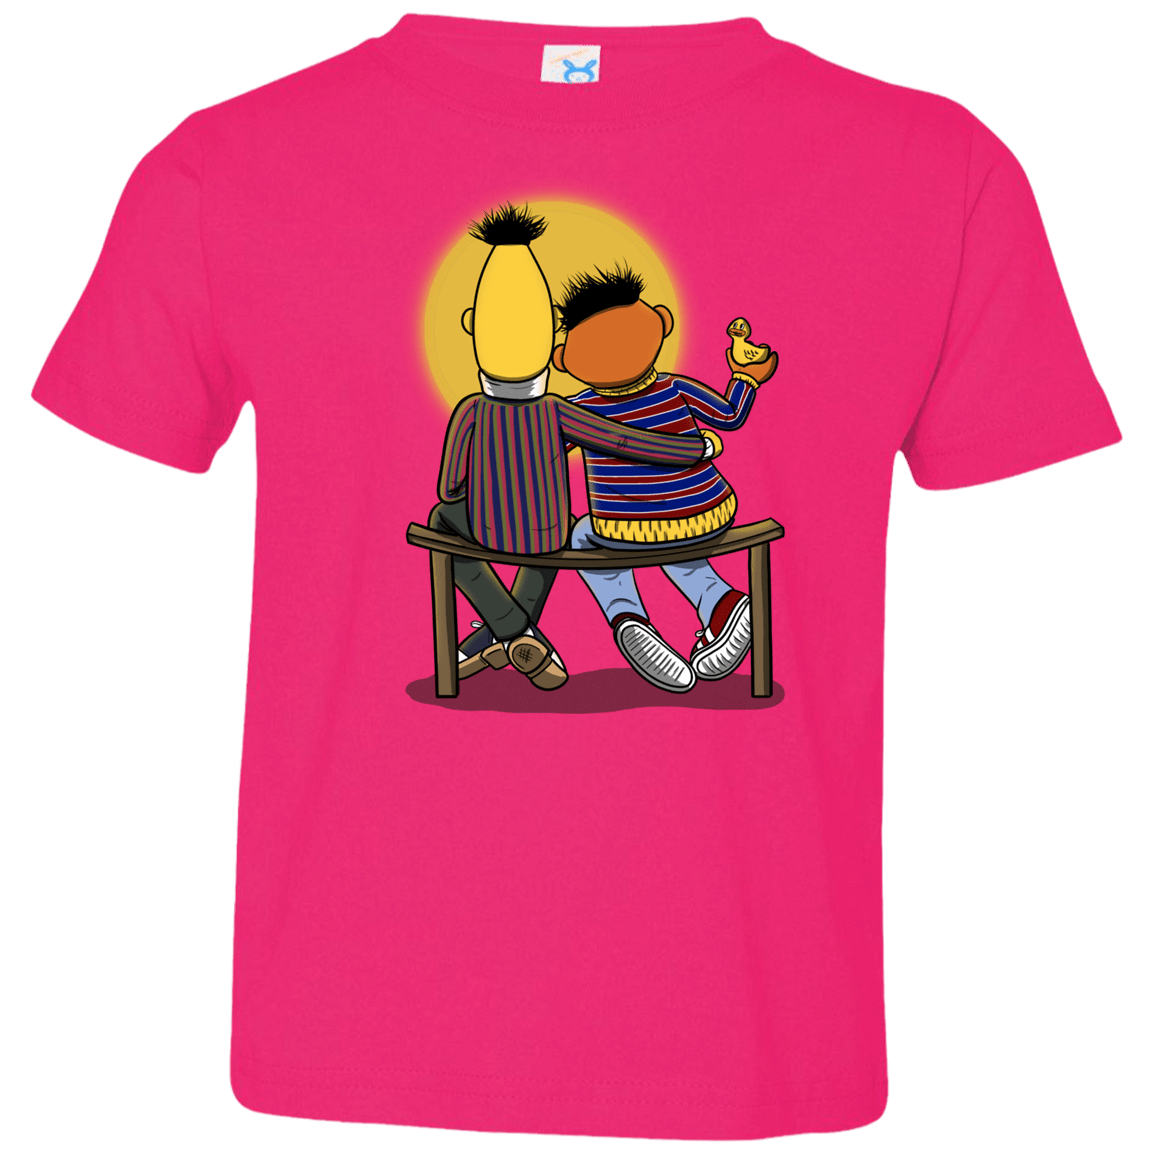 T-Shirts Hot Pink / 2T Sunset Street Toddler Premium T-Shirt